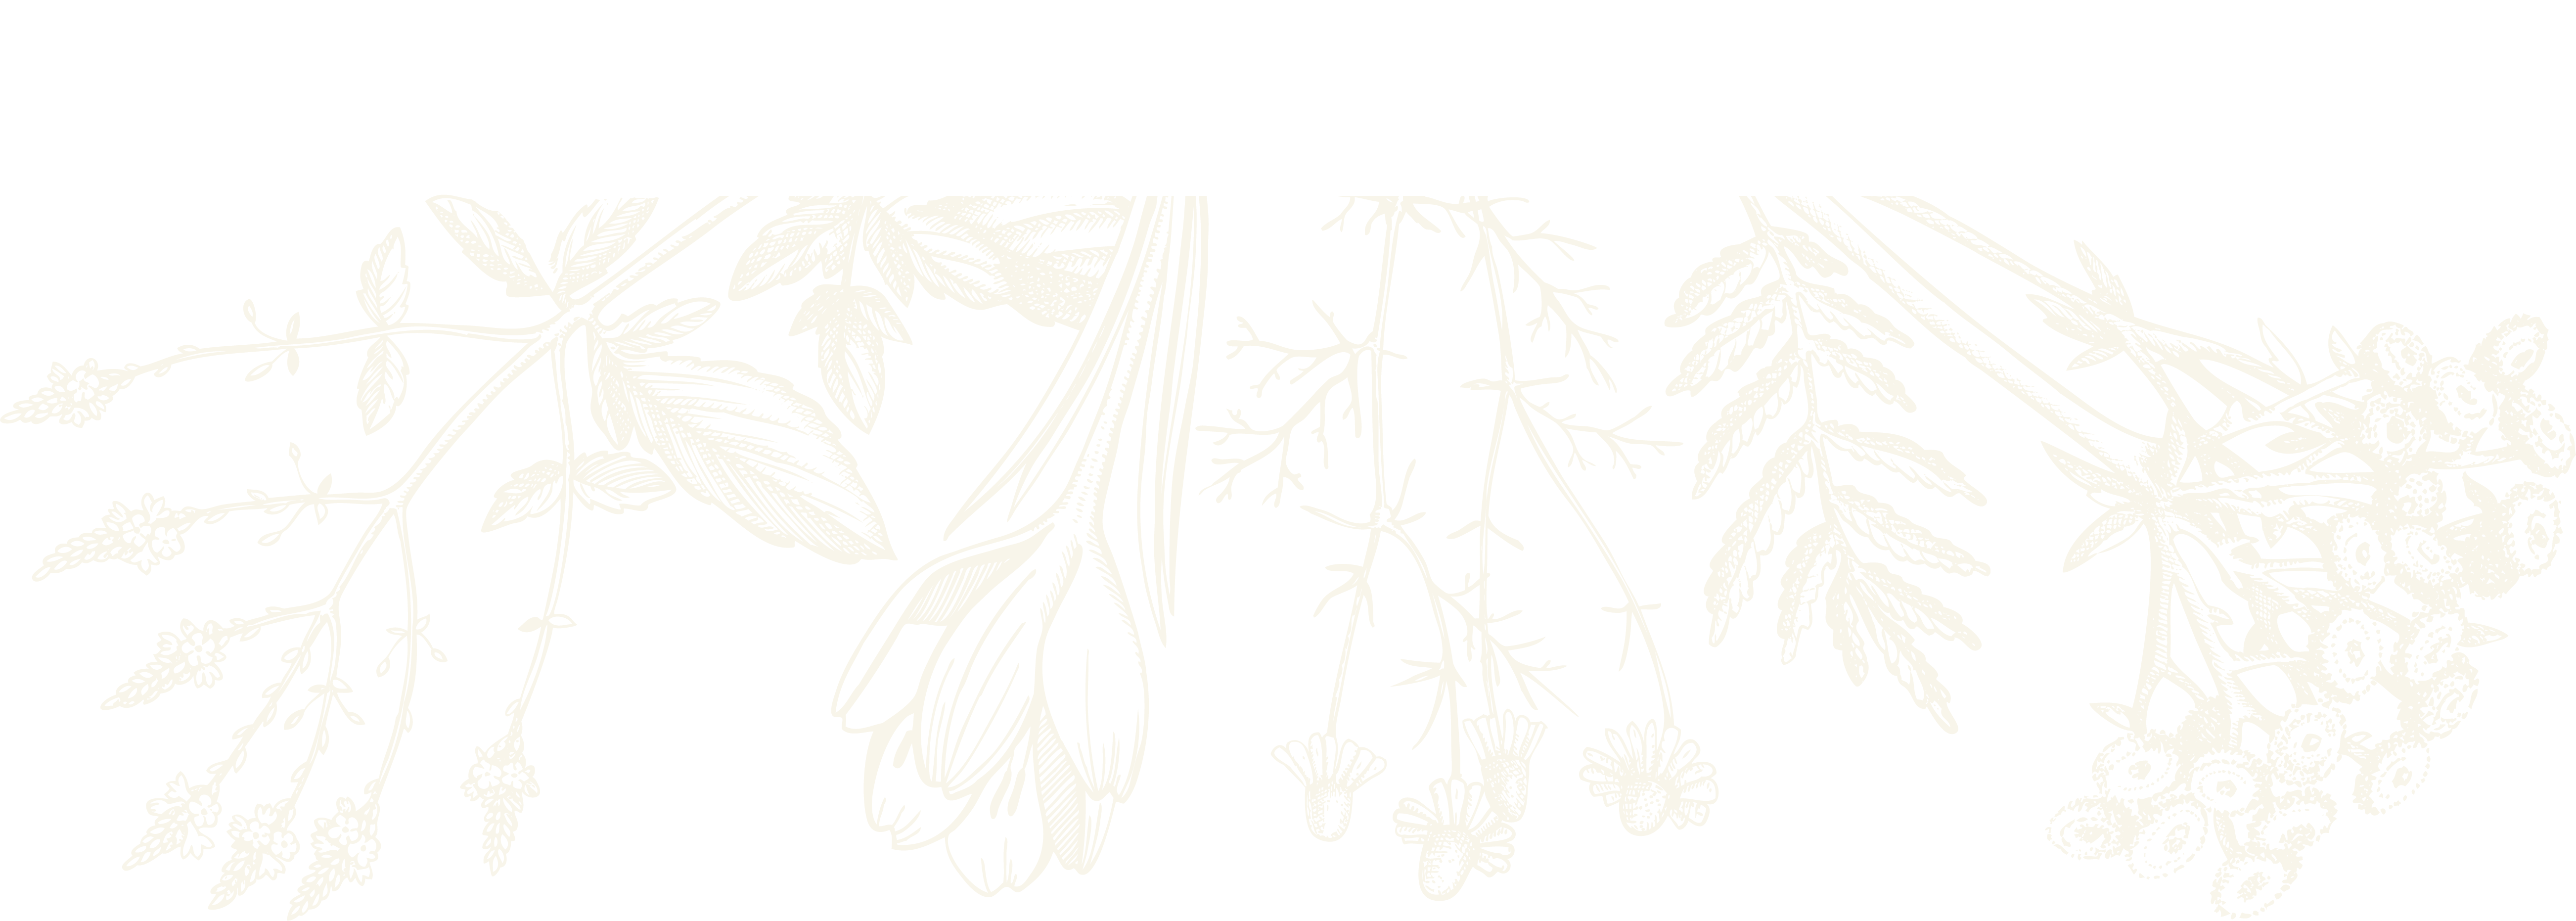 botanical print for school of herbal medicine